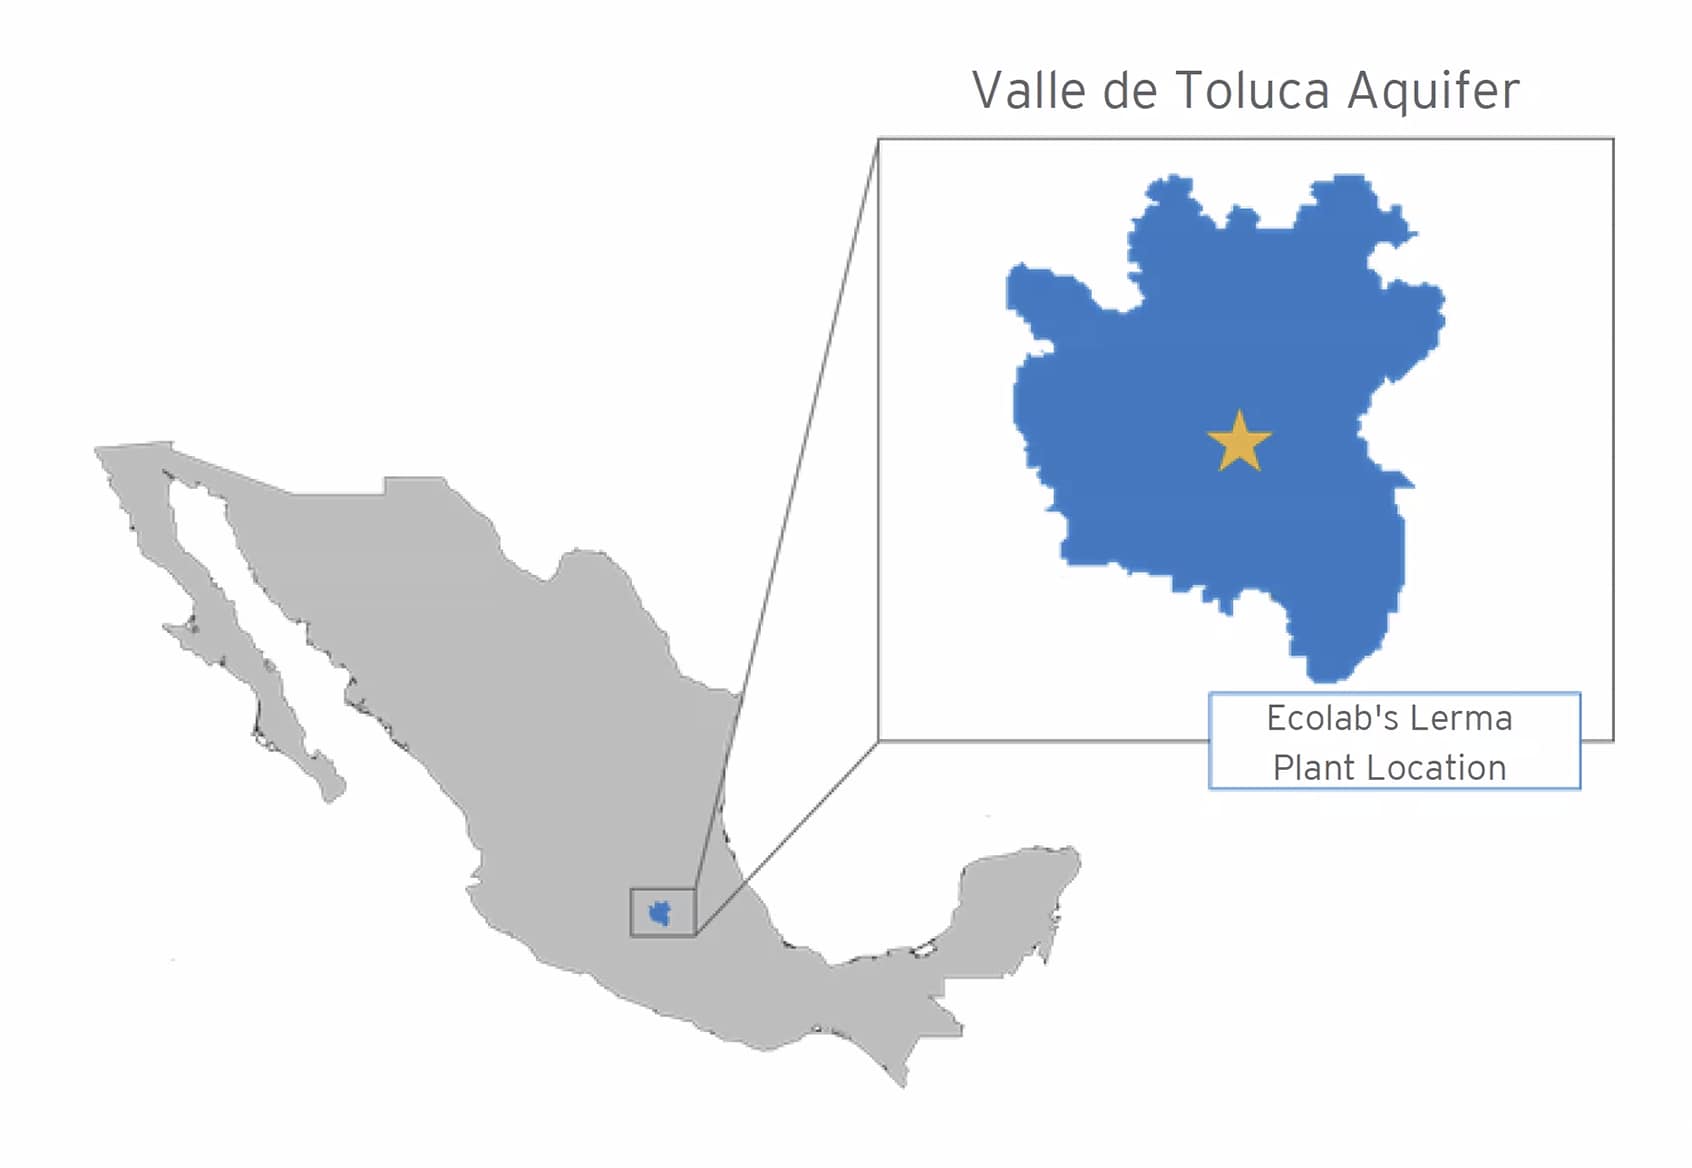 Ecolab’s Lerma, Mexico Plant Map